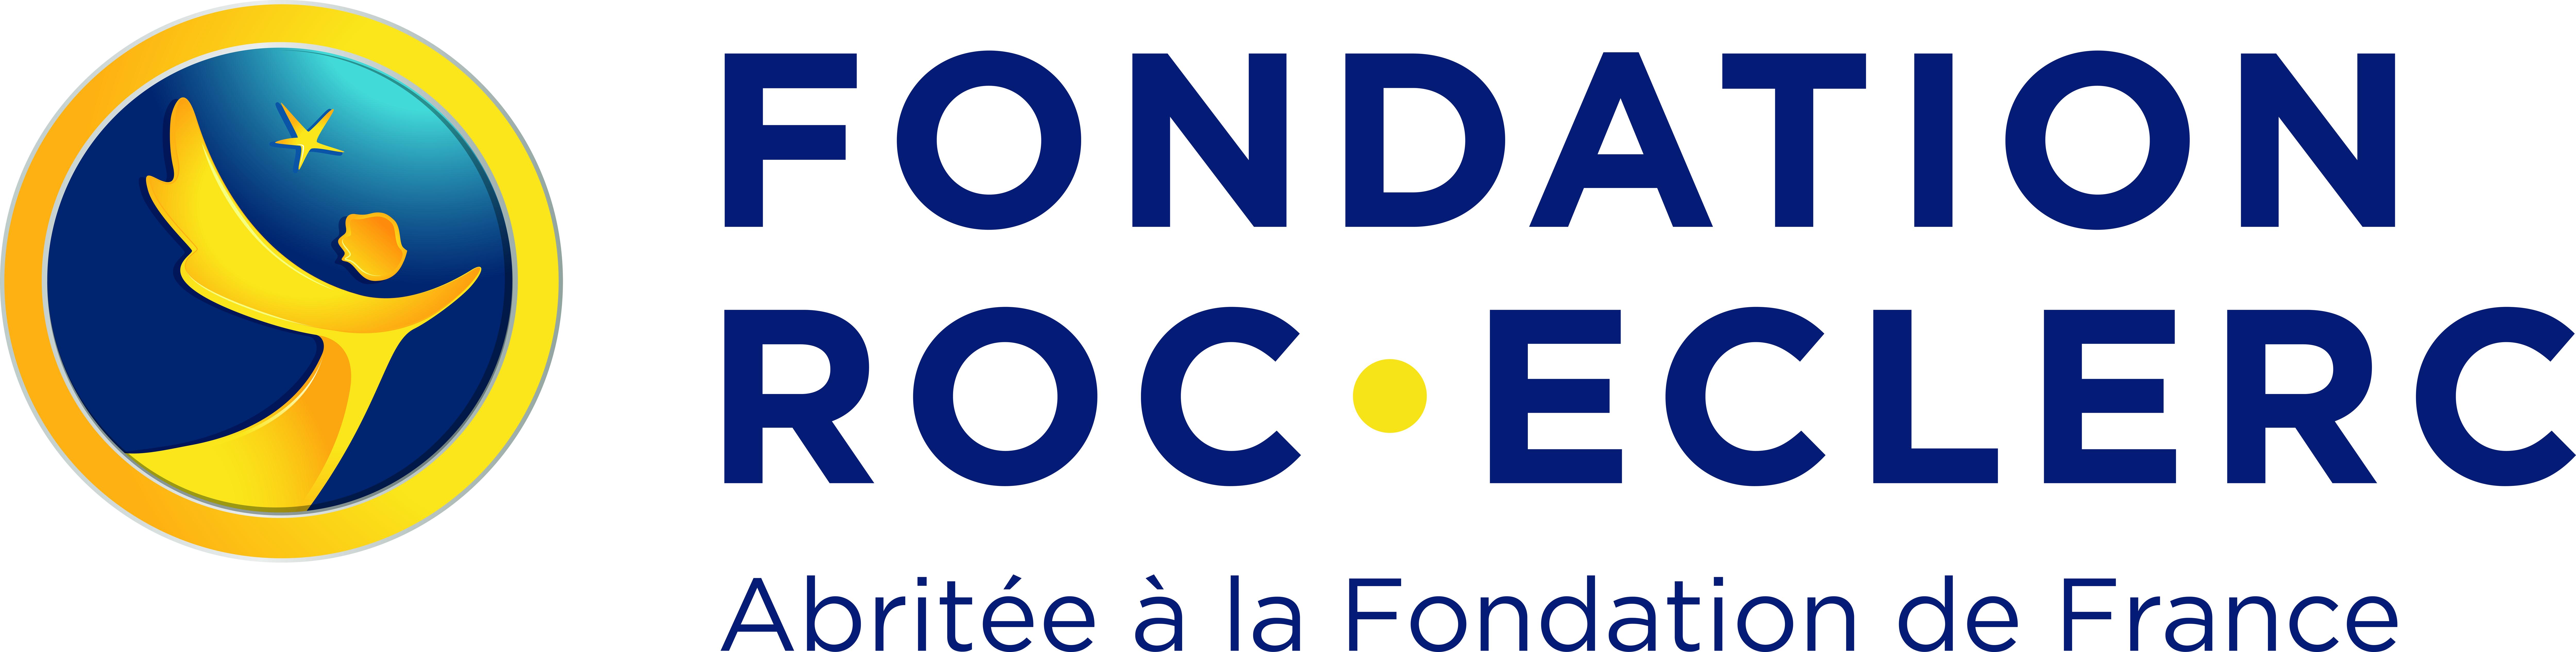 Fondation ROC ECLERC